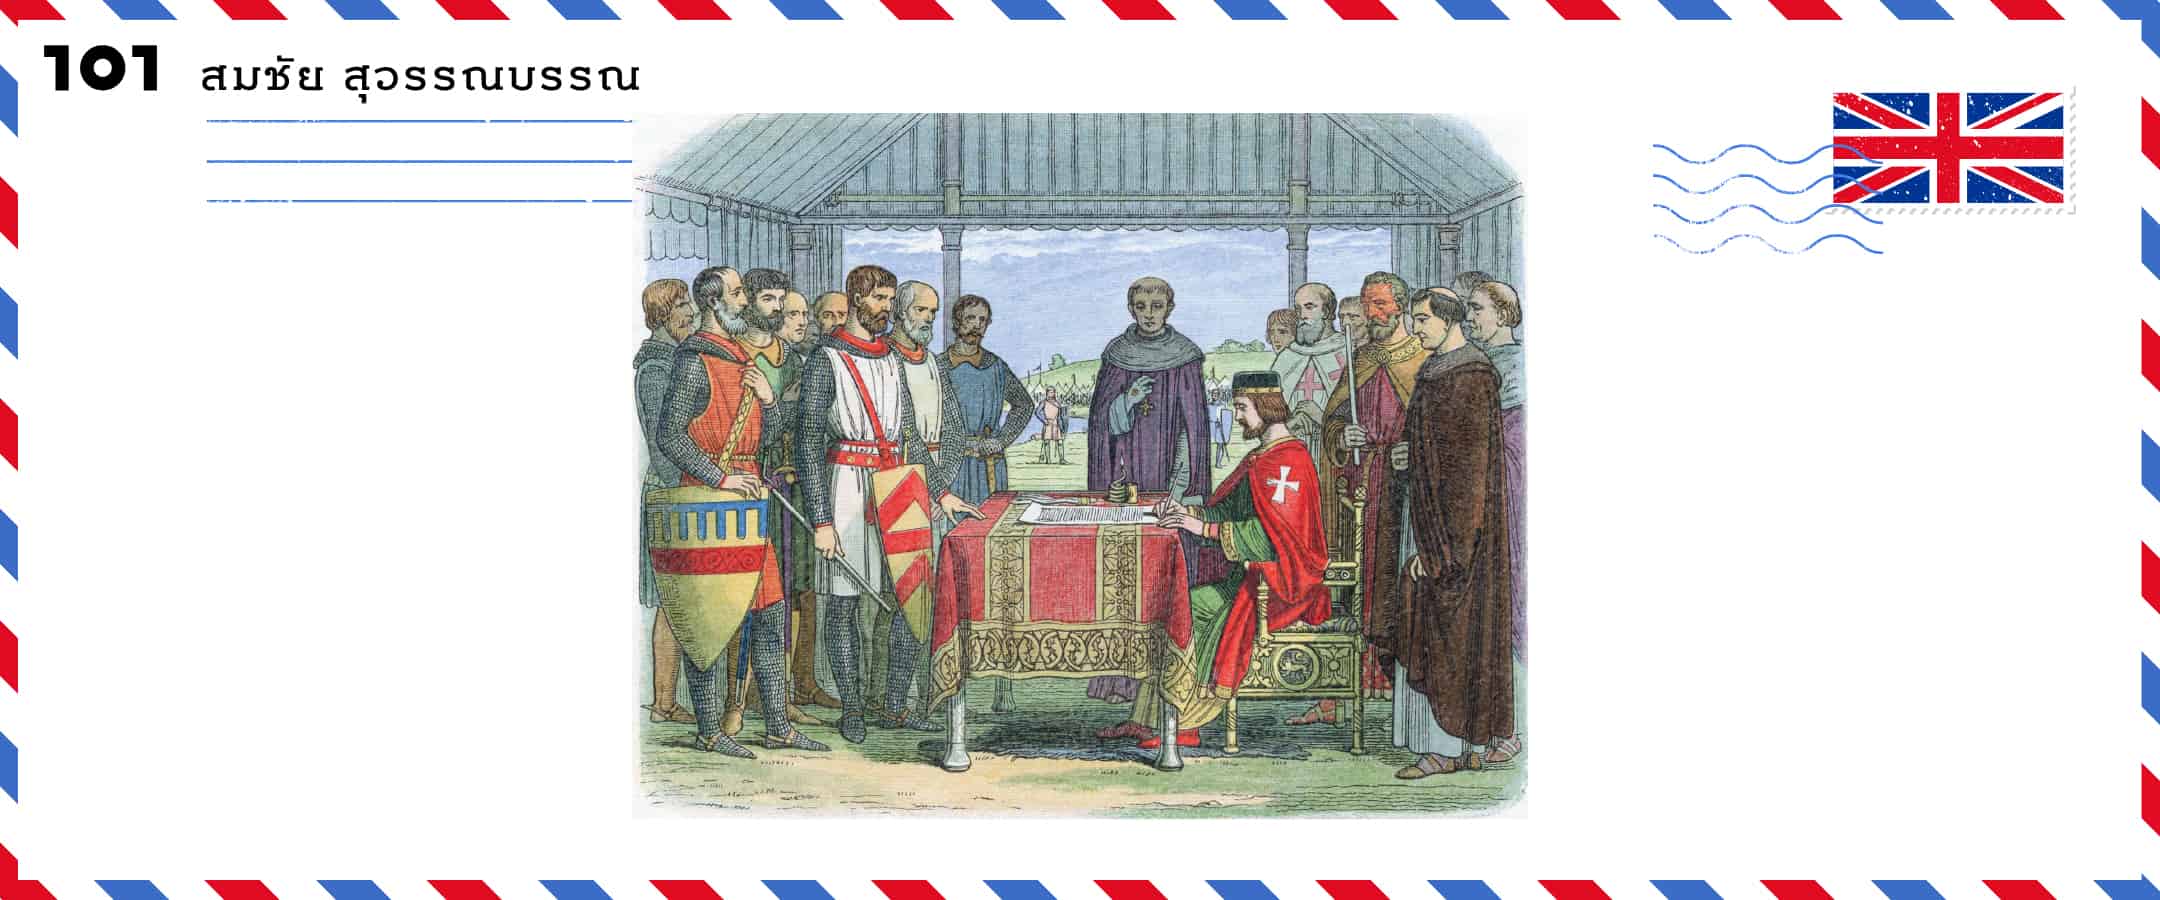 Magna Carta หลักศิลาประชาธิปไตย ปฐมบทปฏิรูปสถาบันกษัตริย์อังกฤษ